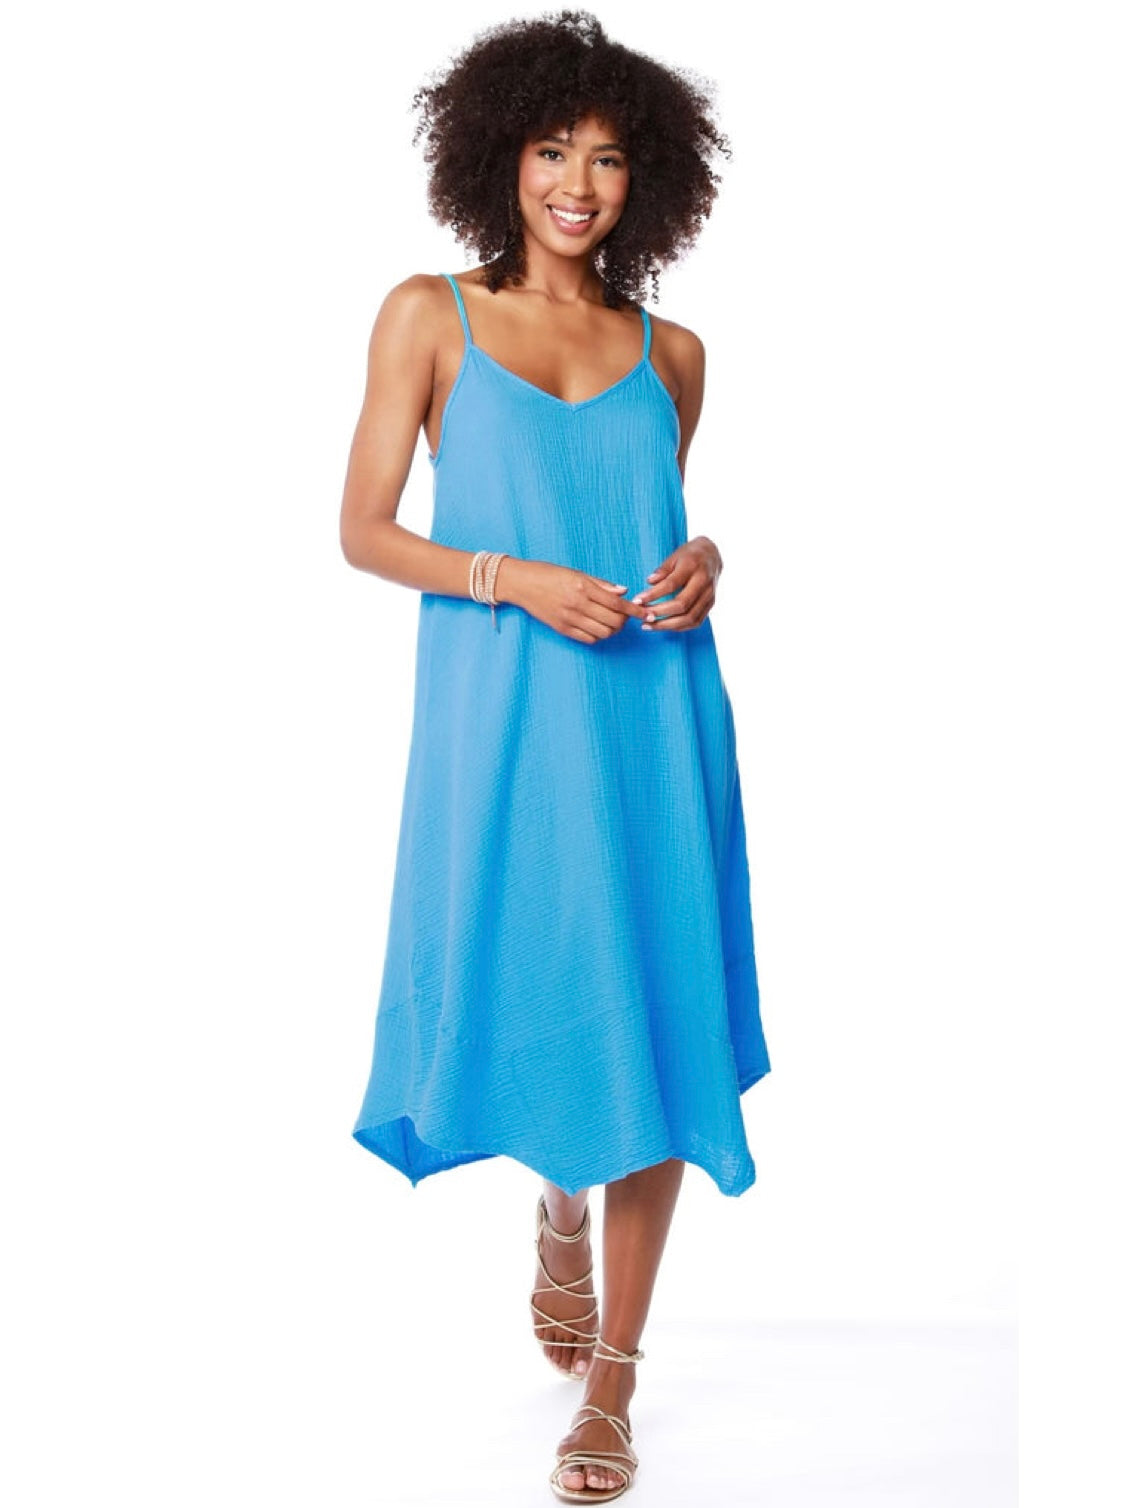 Bobi Handkerchief Maxi Dress in Mykonos - Size L Available